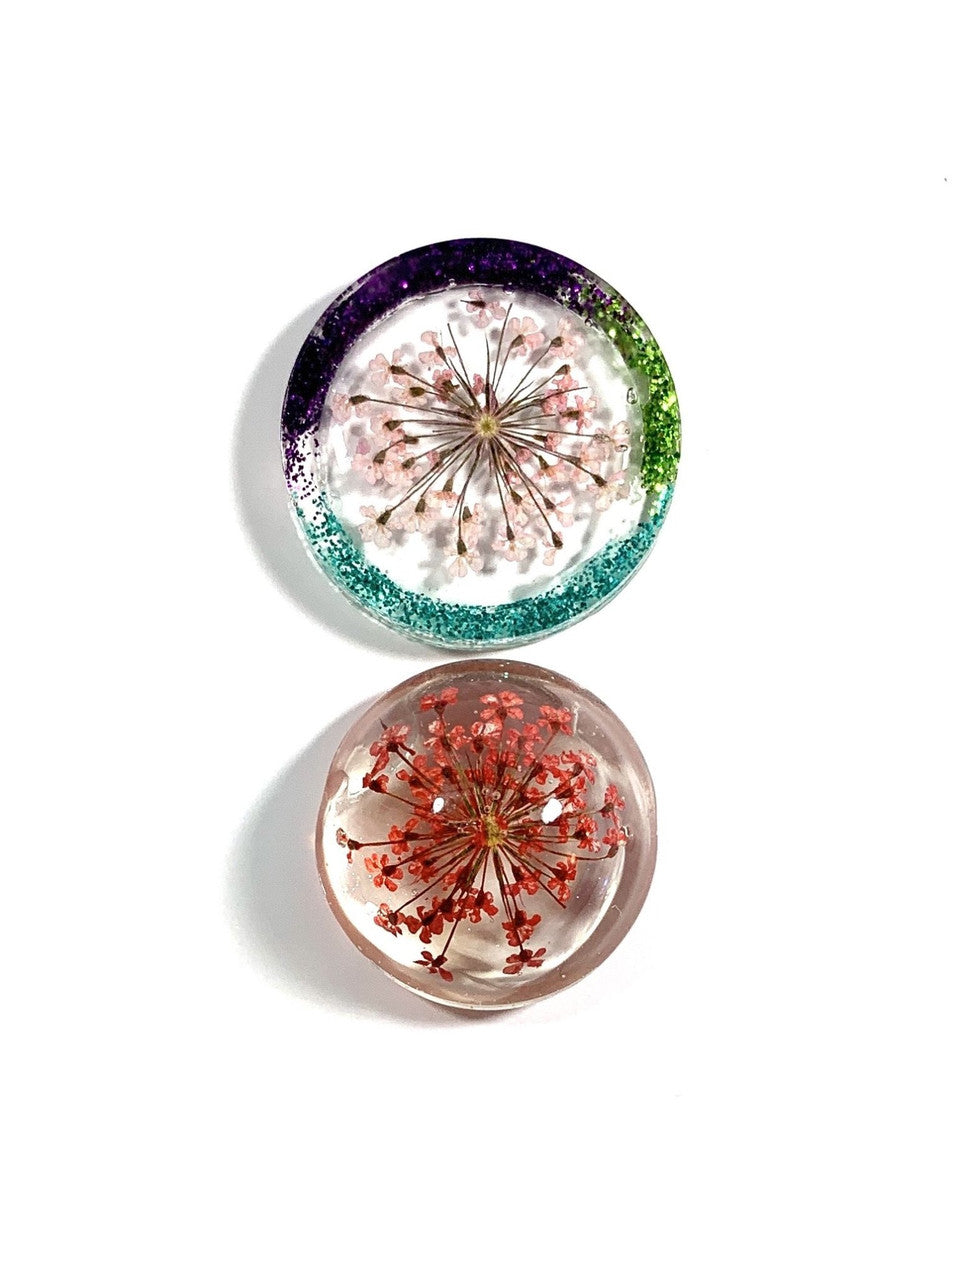 Pendant Transparent Silicone Eyeball Dome Pendant Mold Set for Epoxy Resin Art Jewelry Mini Dome